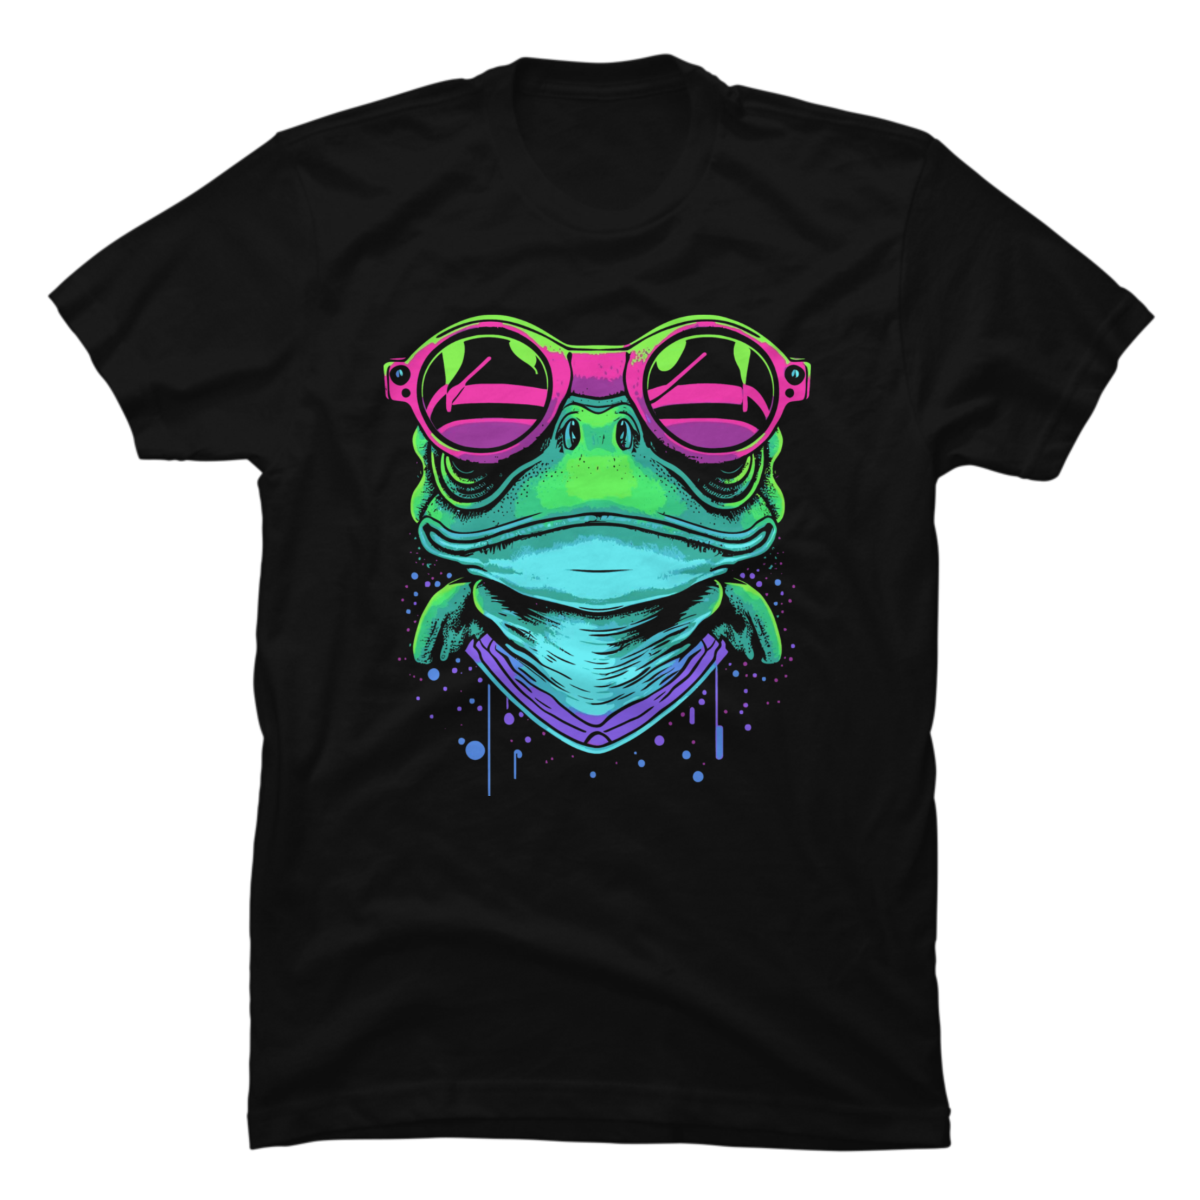 Retro Frog | Shirt Design by Jeff Desmond on Dribbble